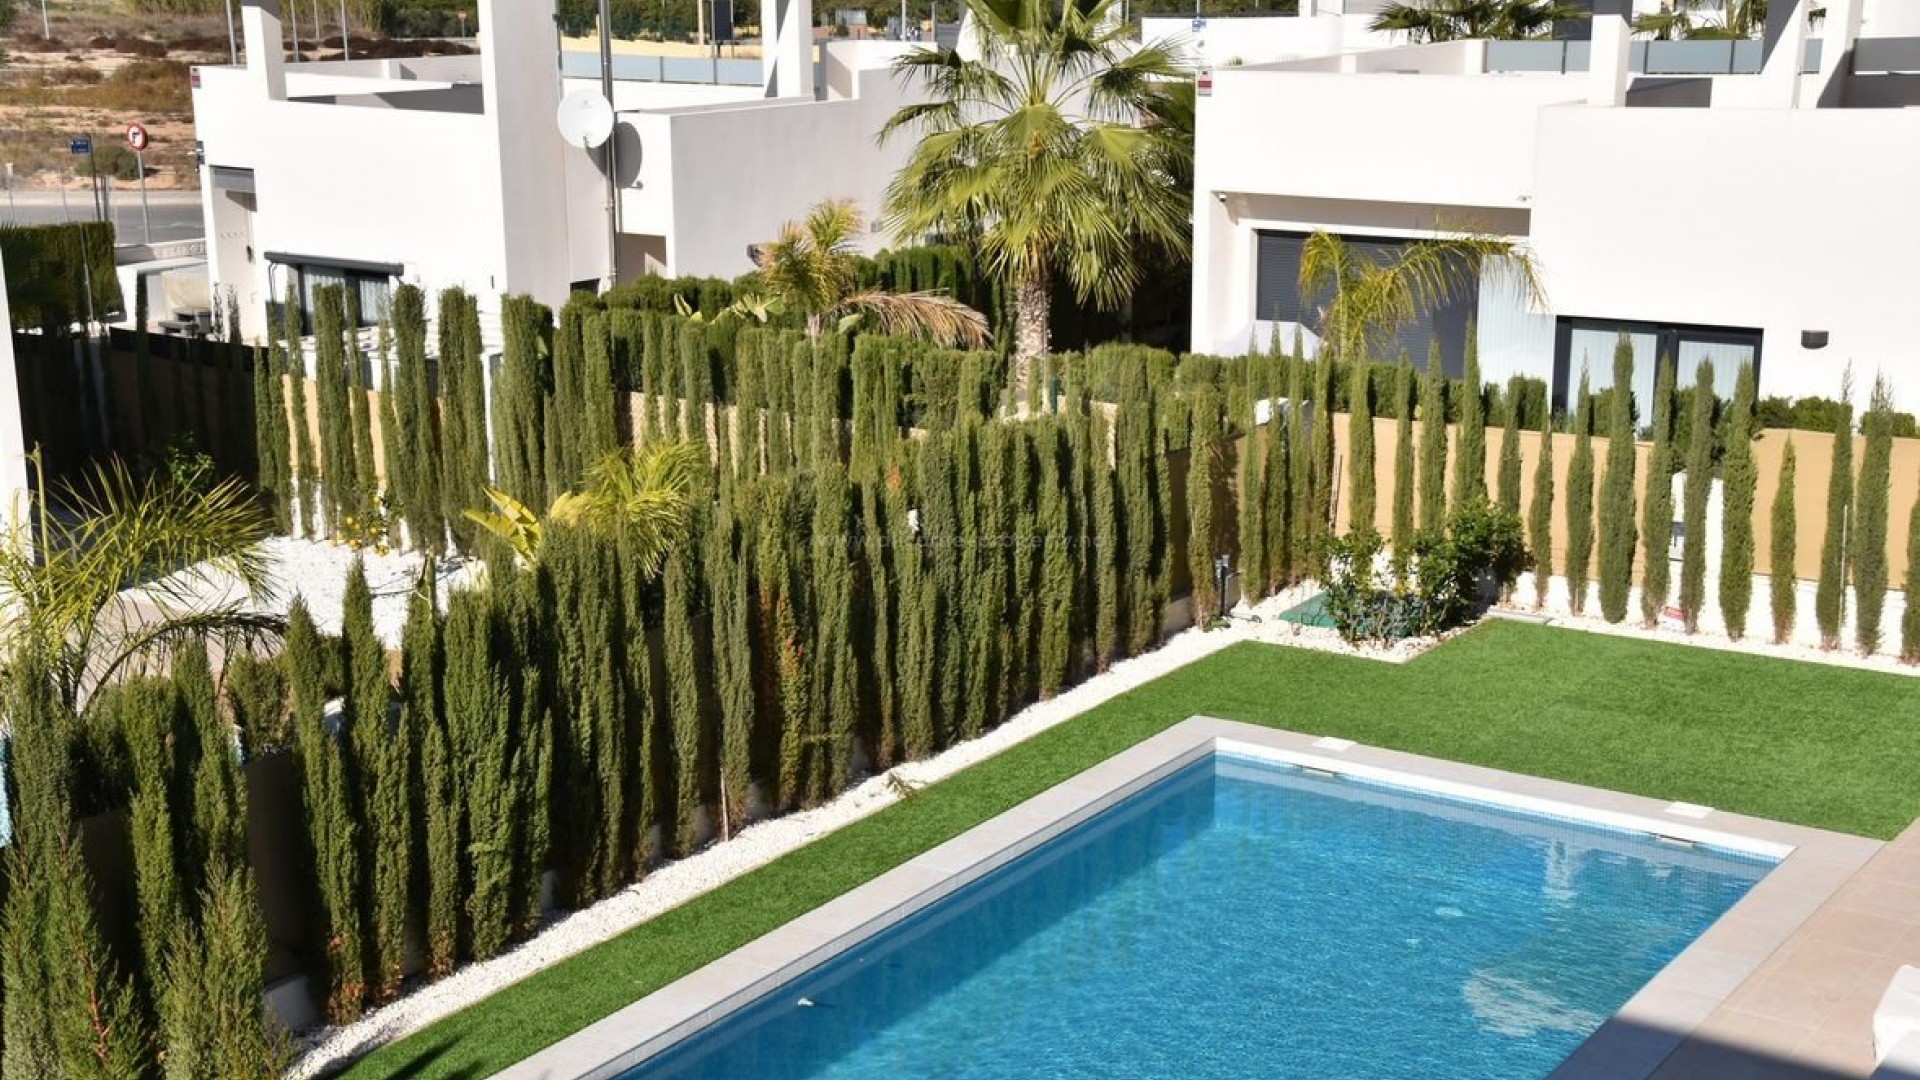 Moderne villa/hus i Benijofar, 3 soverom, 2/3 bad, fantastisk privat basseng, terrasse og solarium. Golf på La Marquesa-klubben kun 5 minutter unna